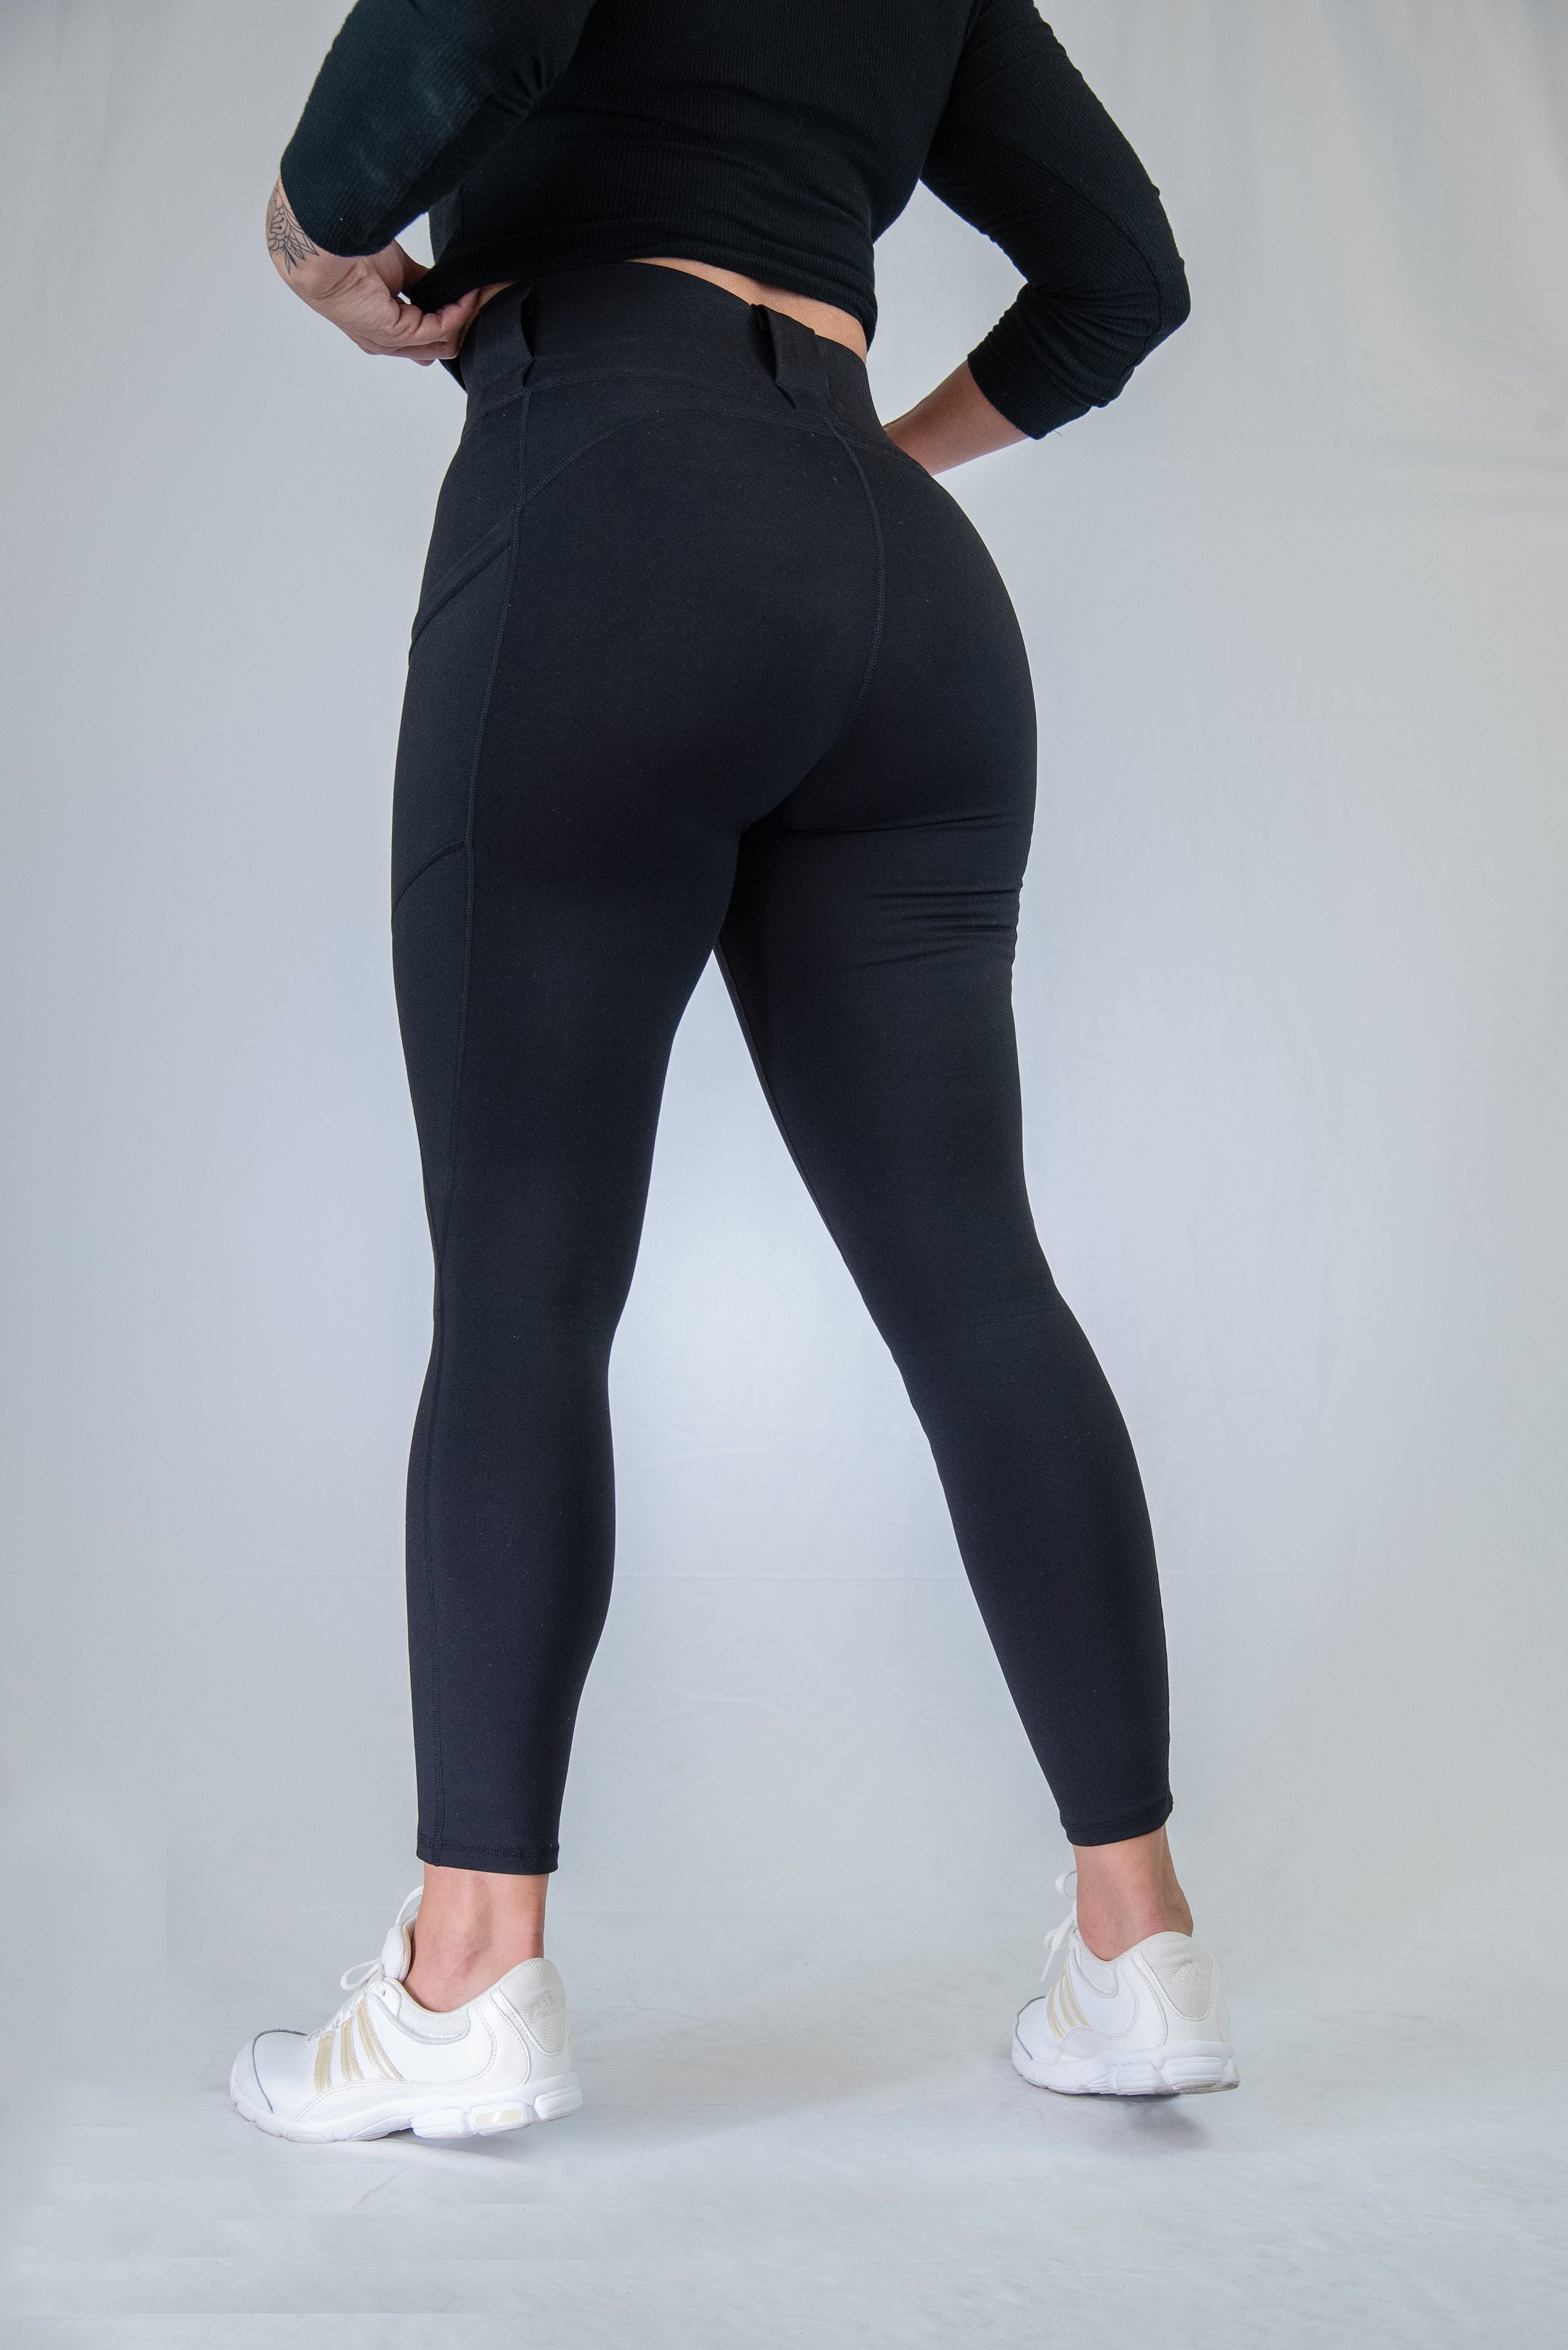 Big booty thick curvy in black leggings